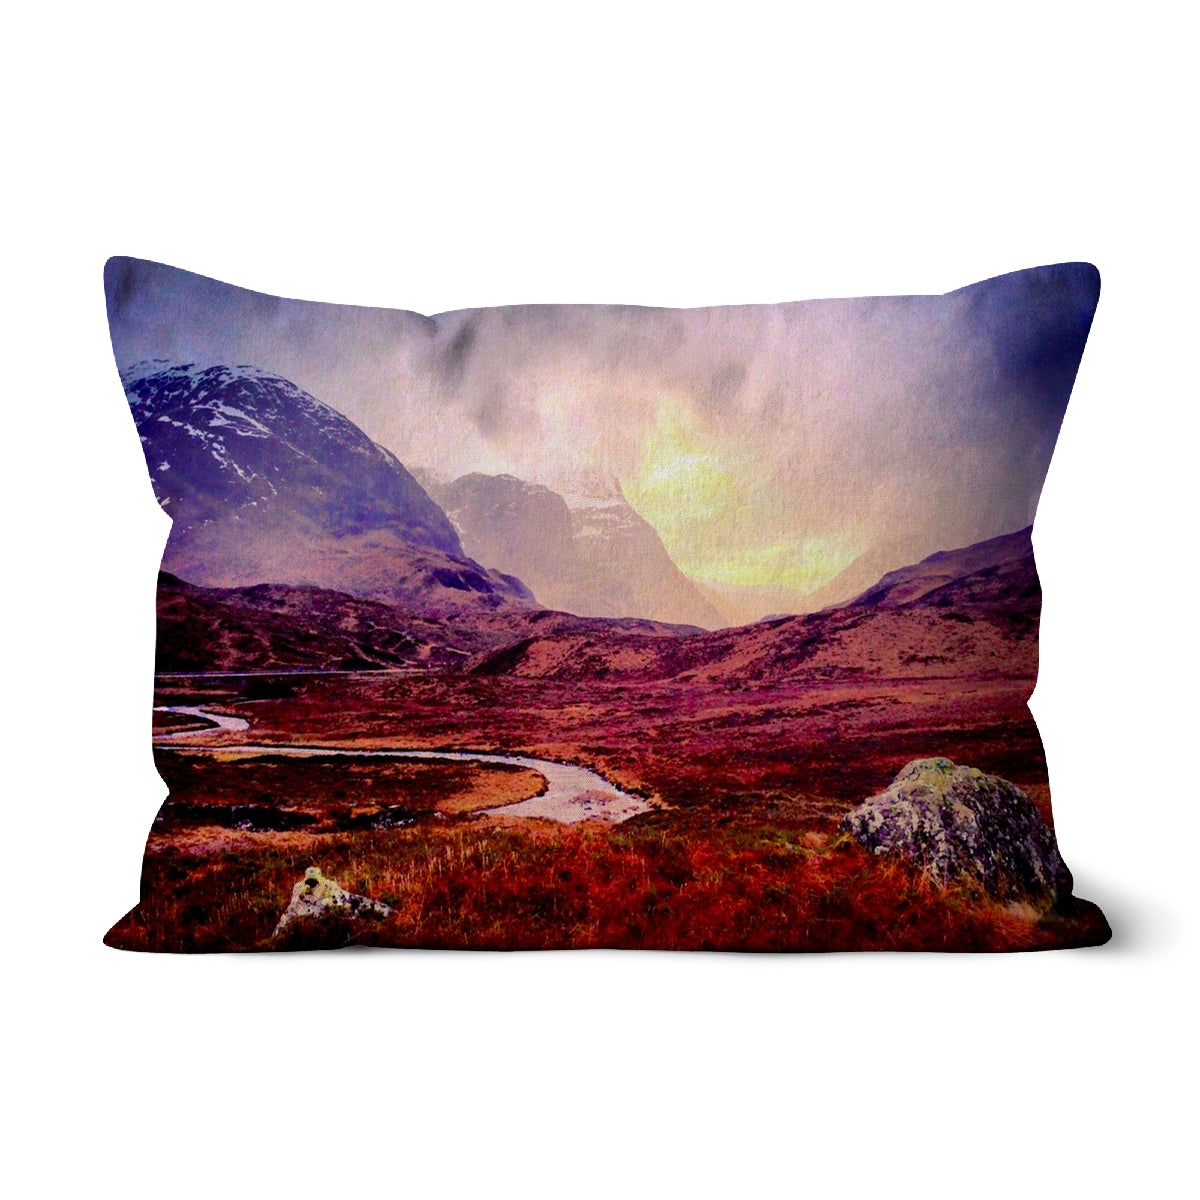 A Brooding Glencoe Art Gifts Cushion-Cushions-Glencoe Art Gallery-Canvas-19"x13"-Paintings, Prints, Homeware, Art Gifts From Scotland By Scottish Artist Kevin Hunter